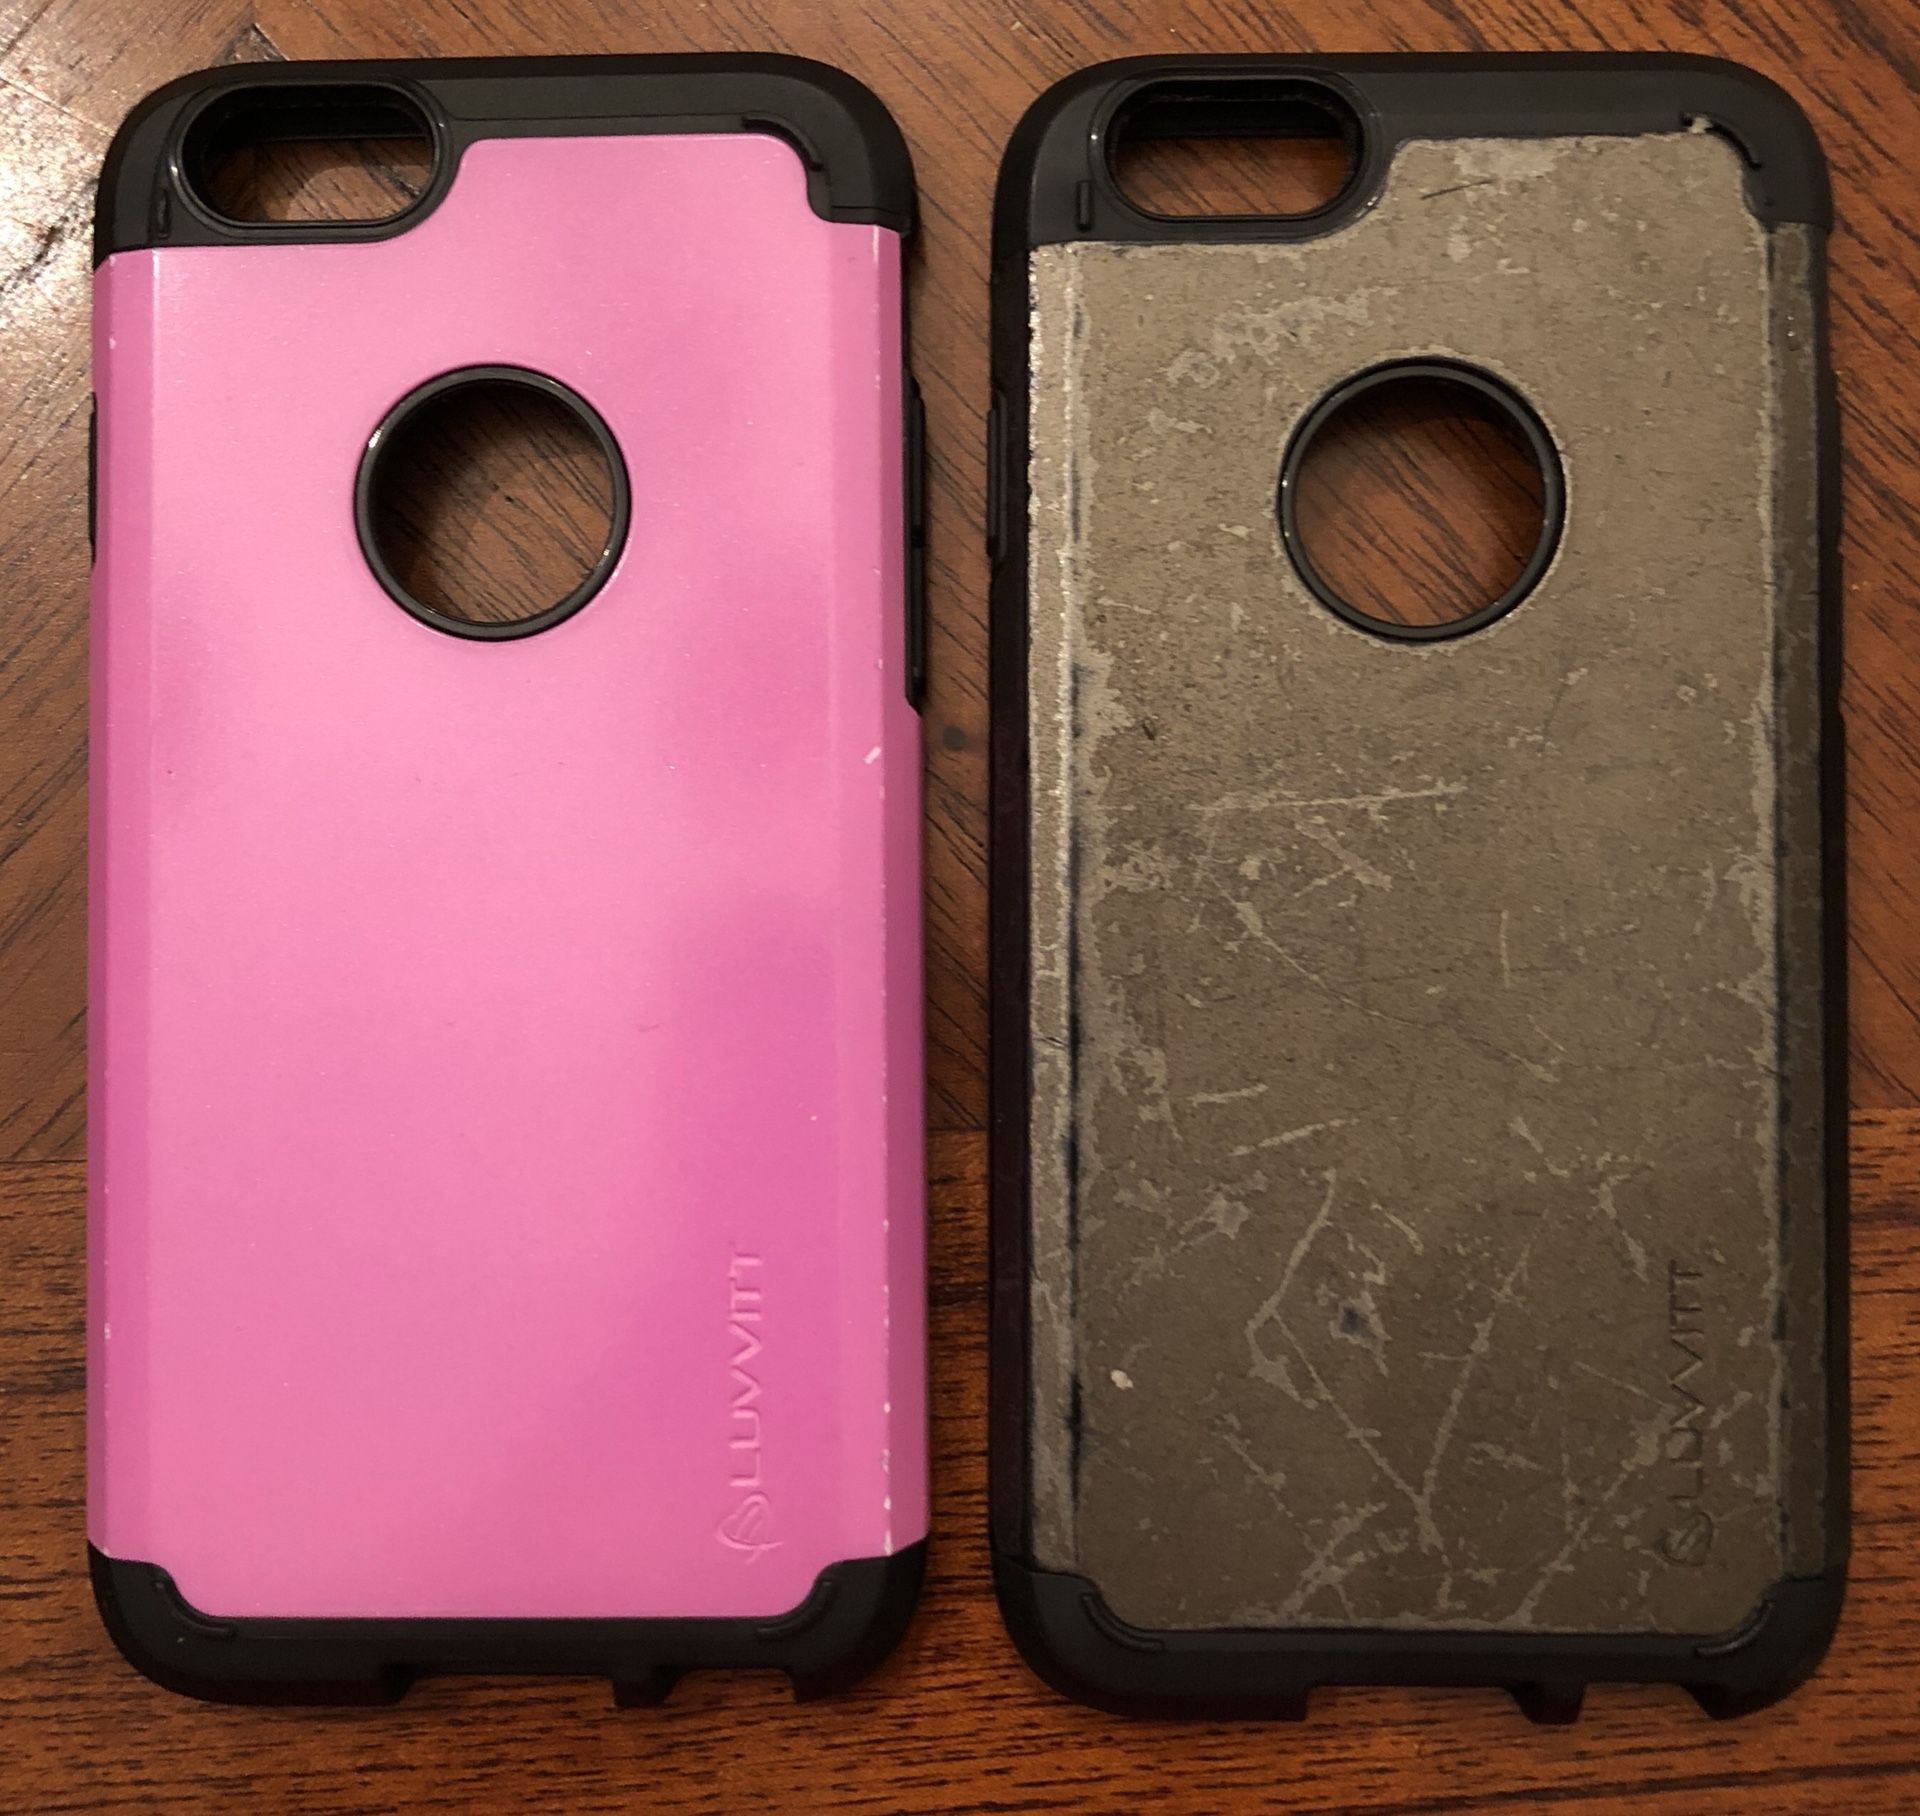 Iphone 6/6s cases